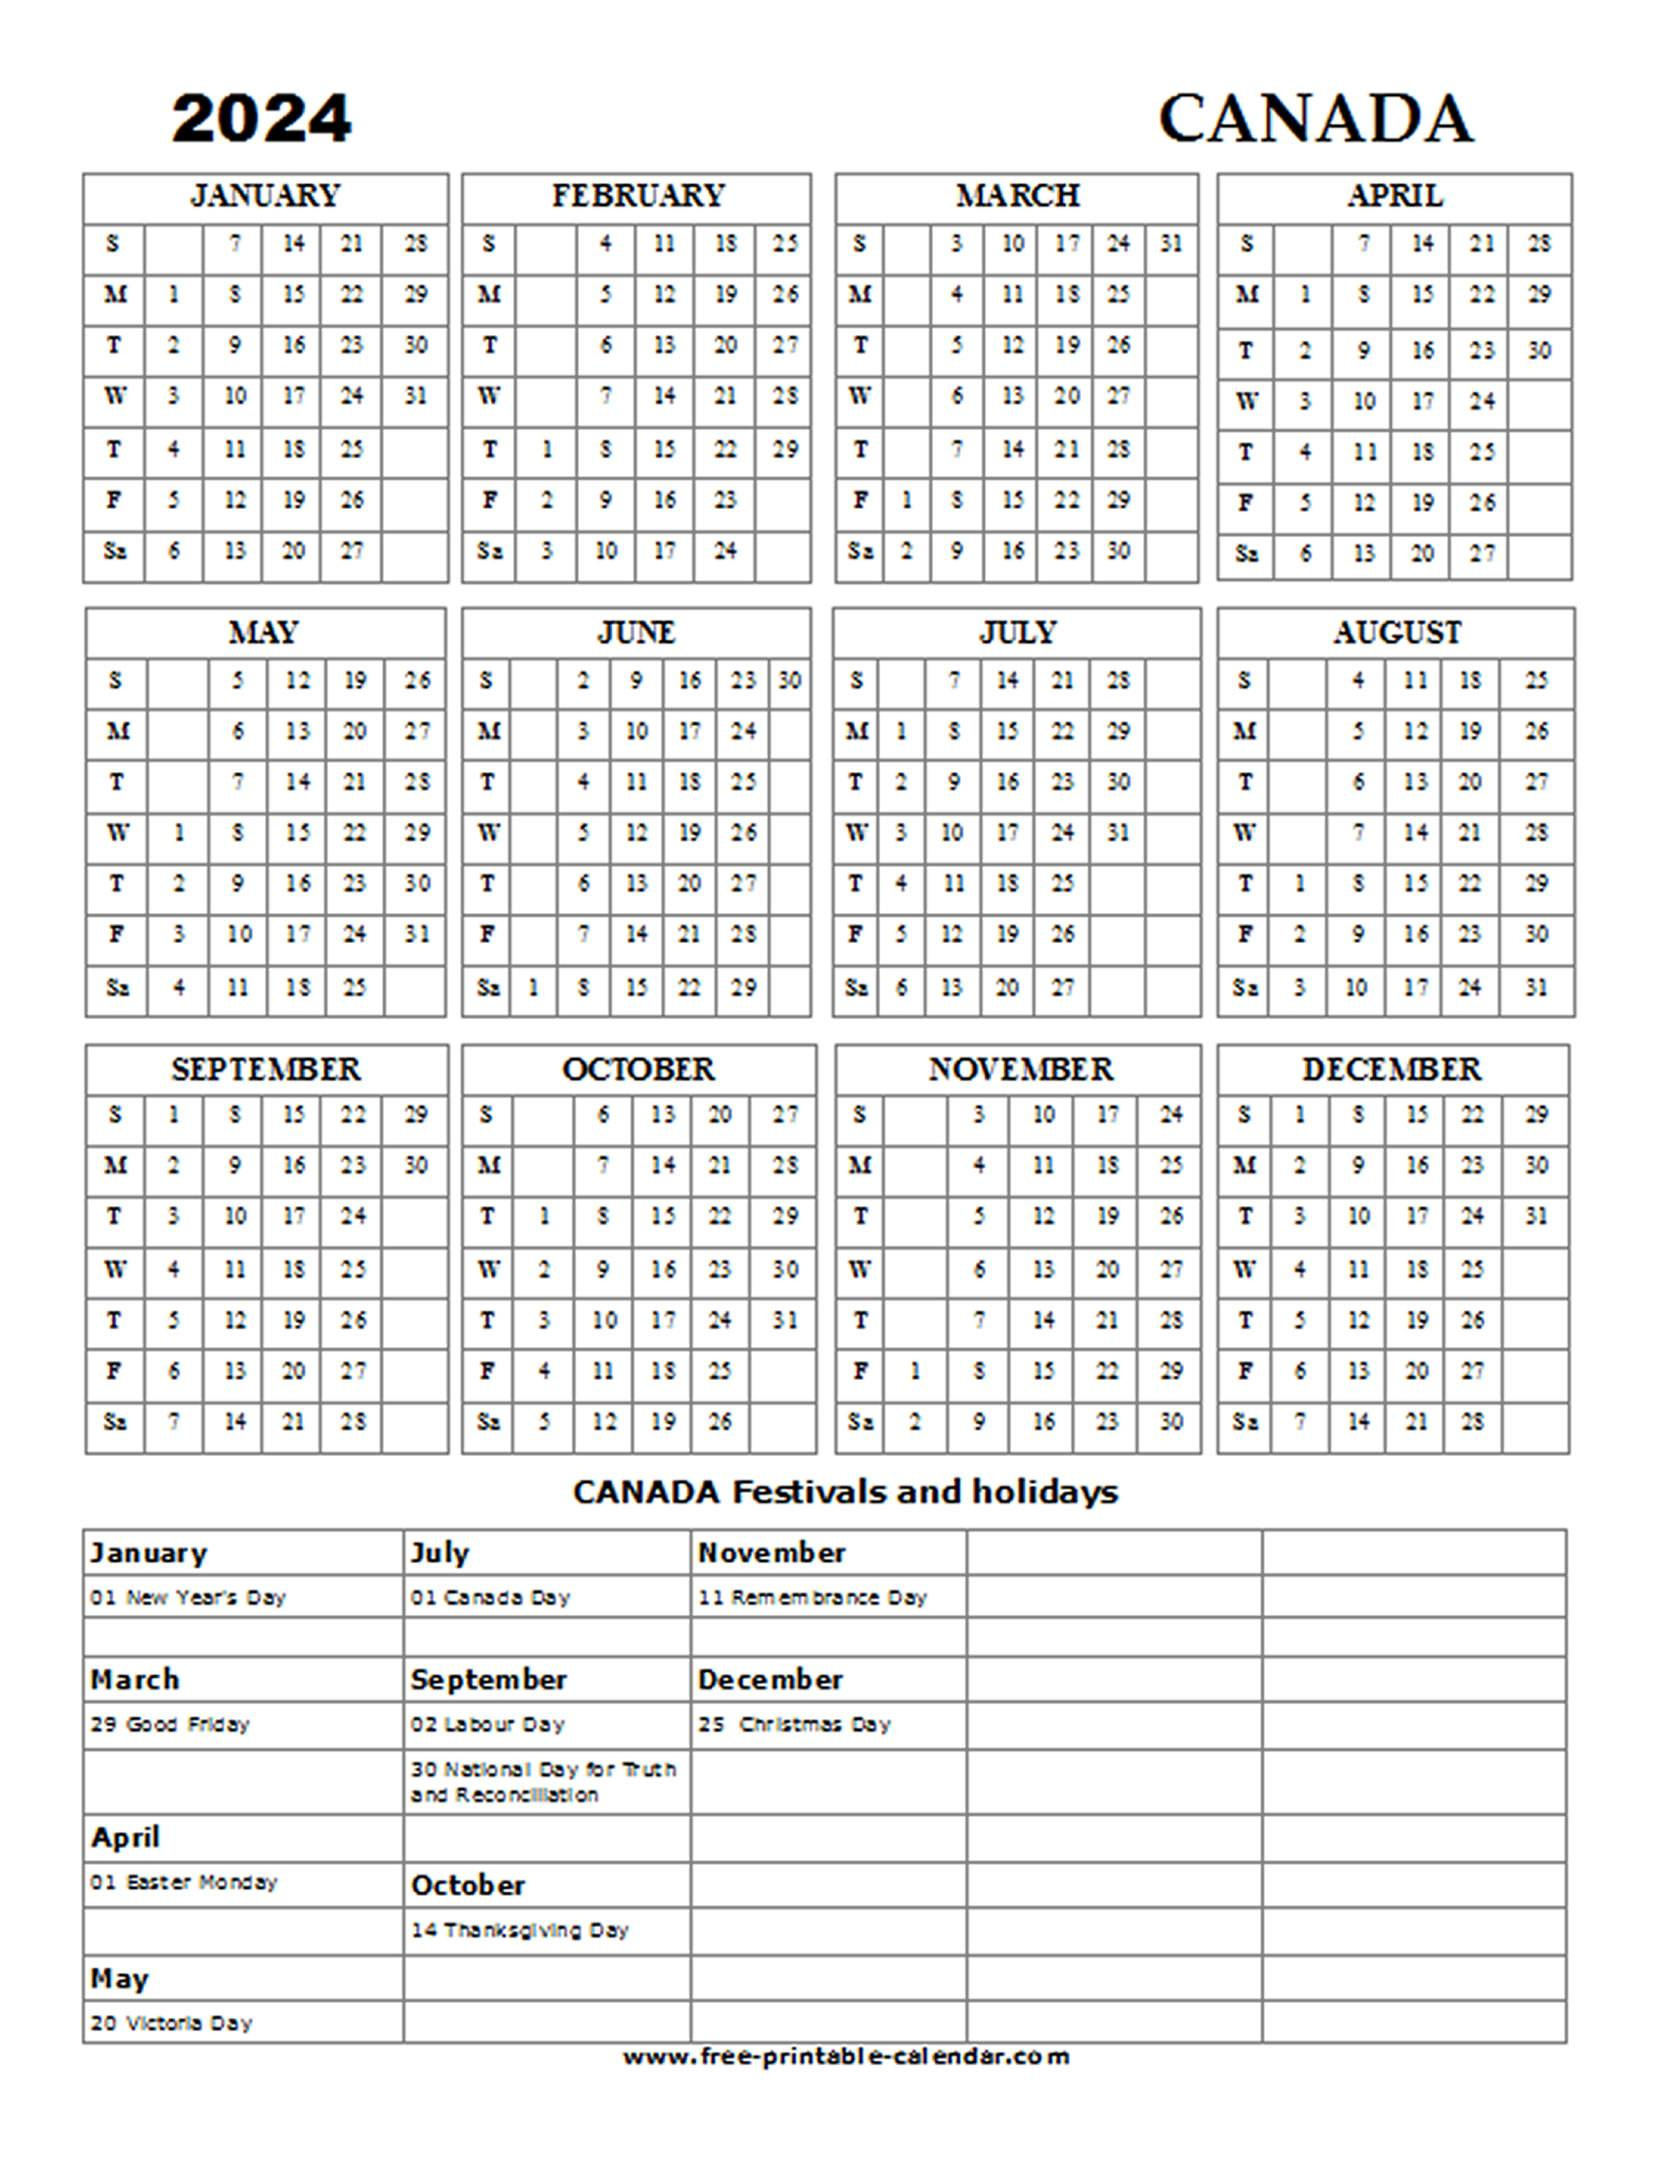 2024 Canada Holiday Calendar - Free-Printable-Calendar | Printable Calendar 2024 Canada Free